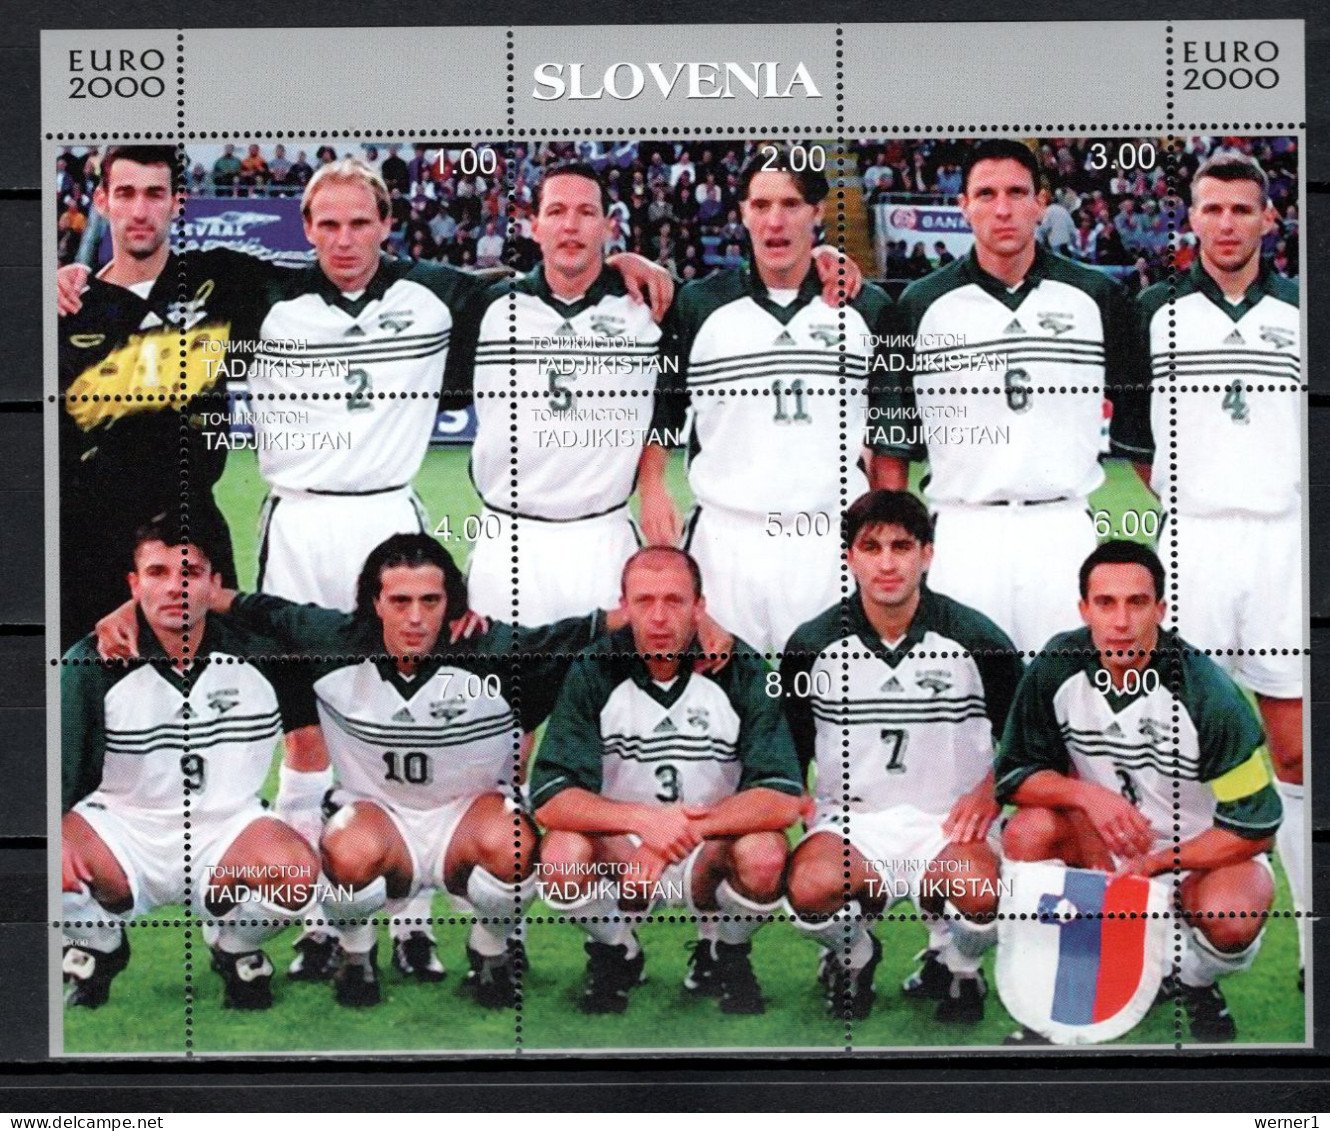 Tadzikistan 2000 Football Soccer European Championship, Sheetlet With Slovenia Team MNH - Eurocopa (UEFA)